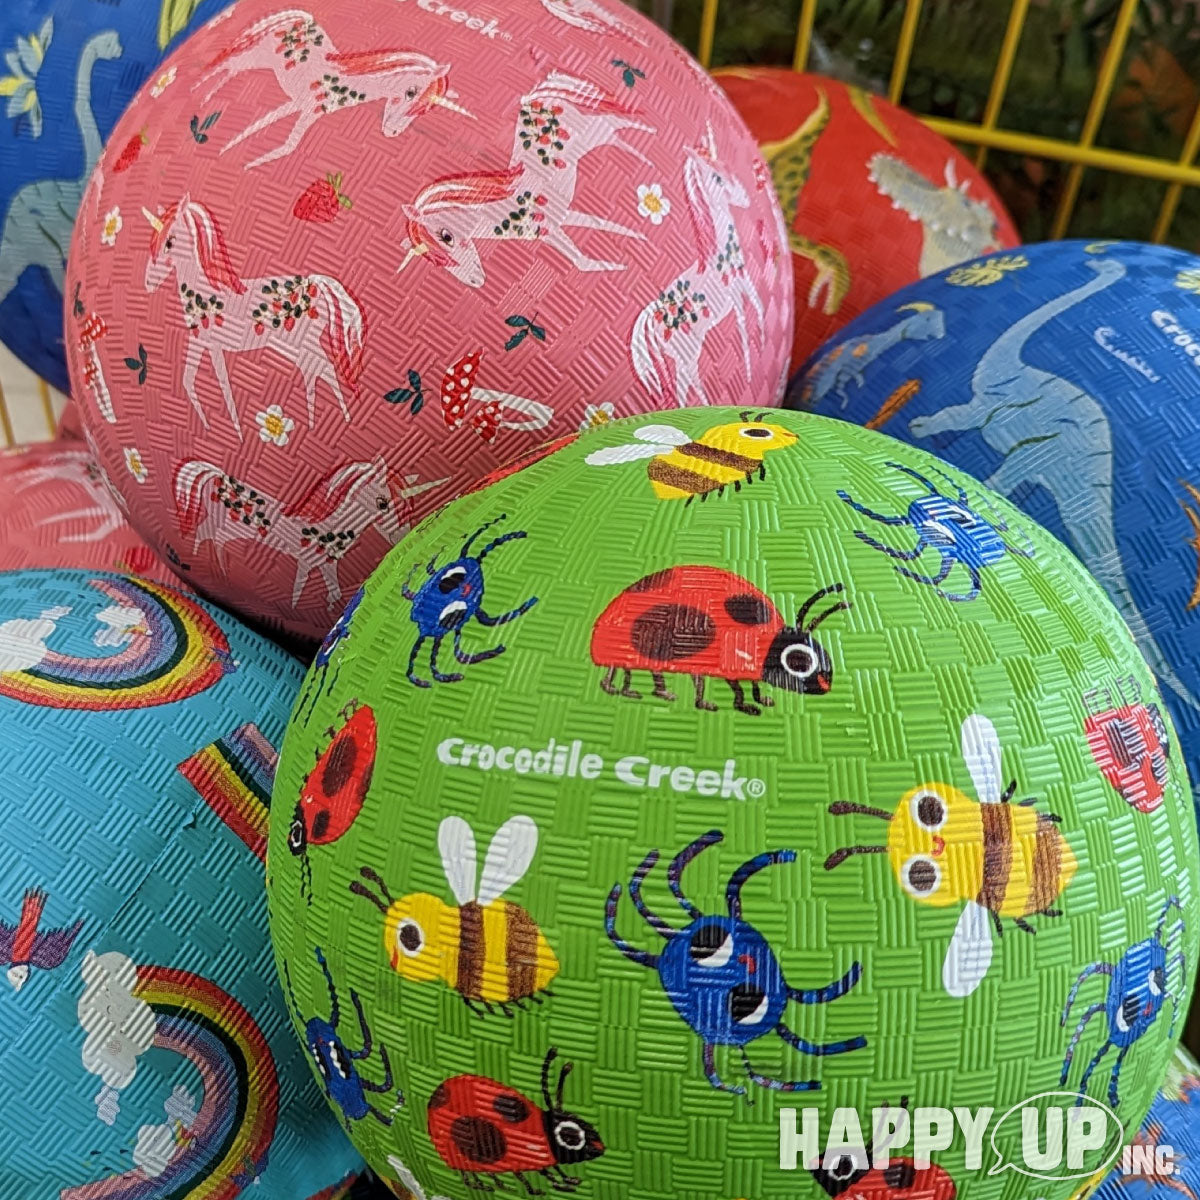 Crocodile Creek 7” Playground Balls